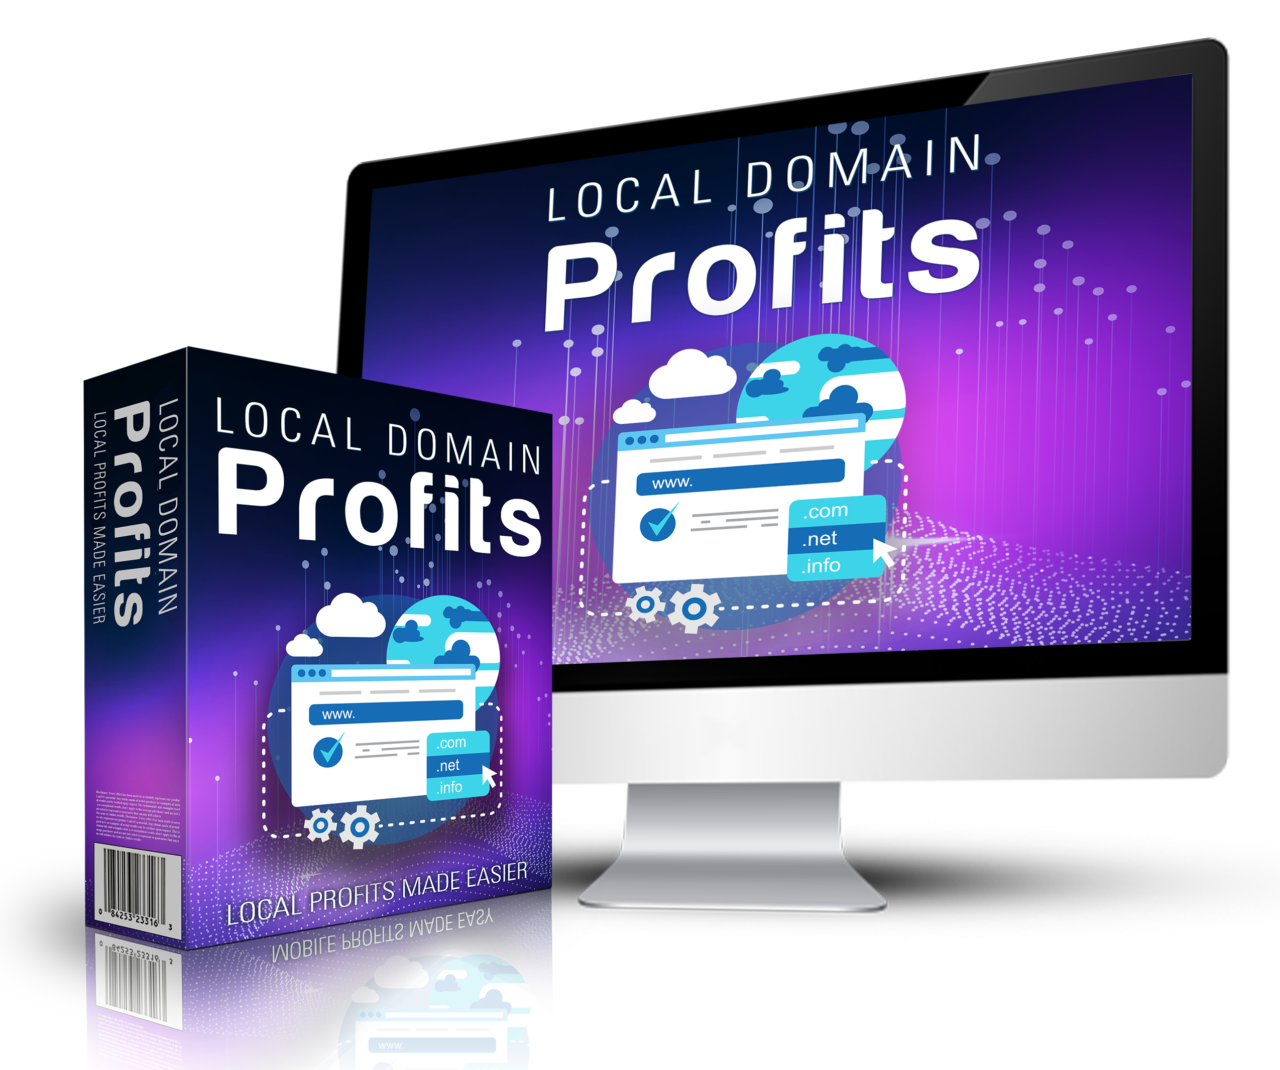 Local Domain Profits